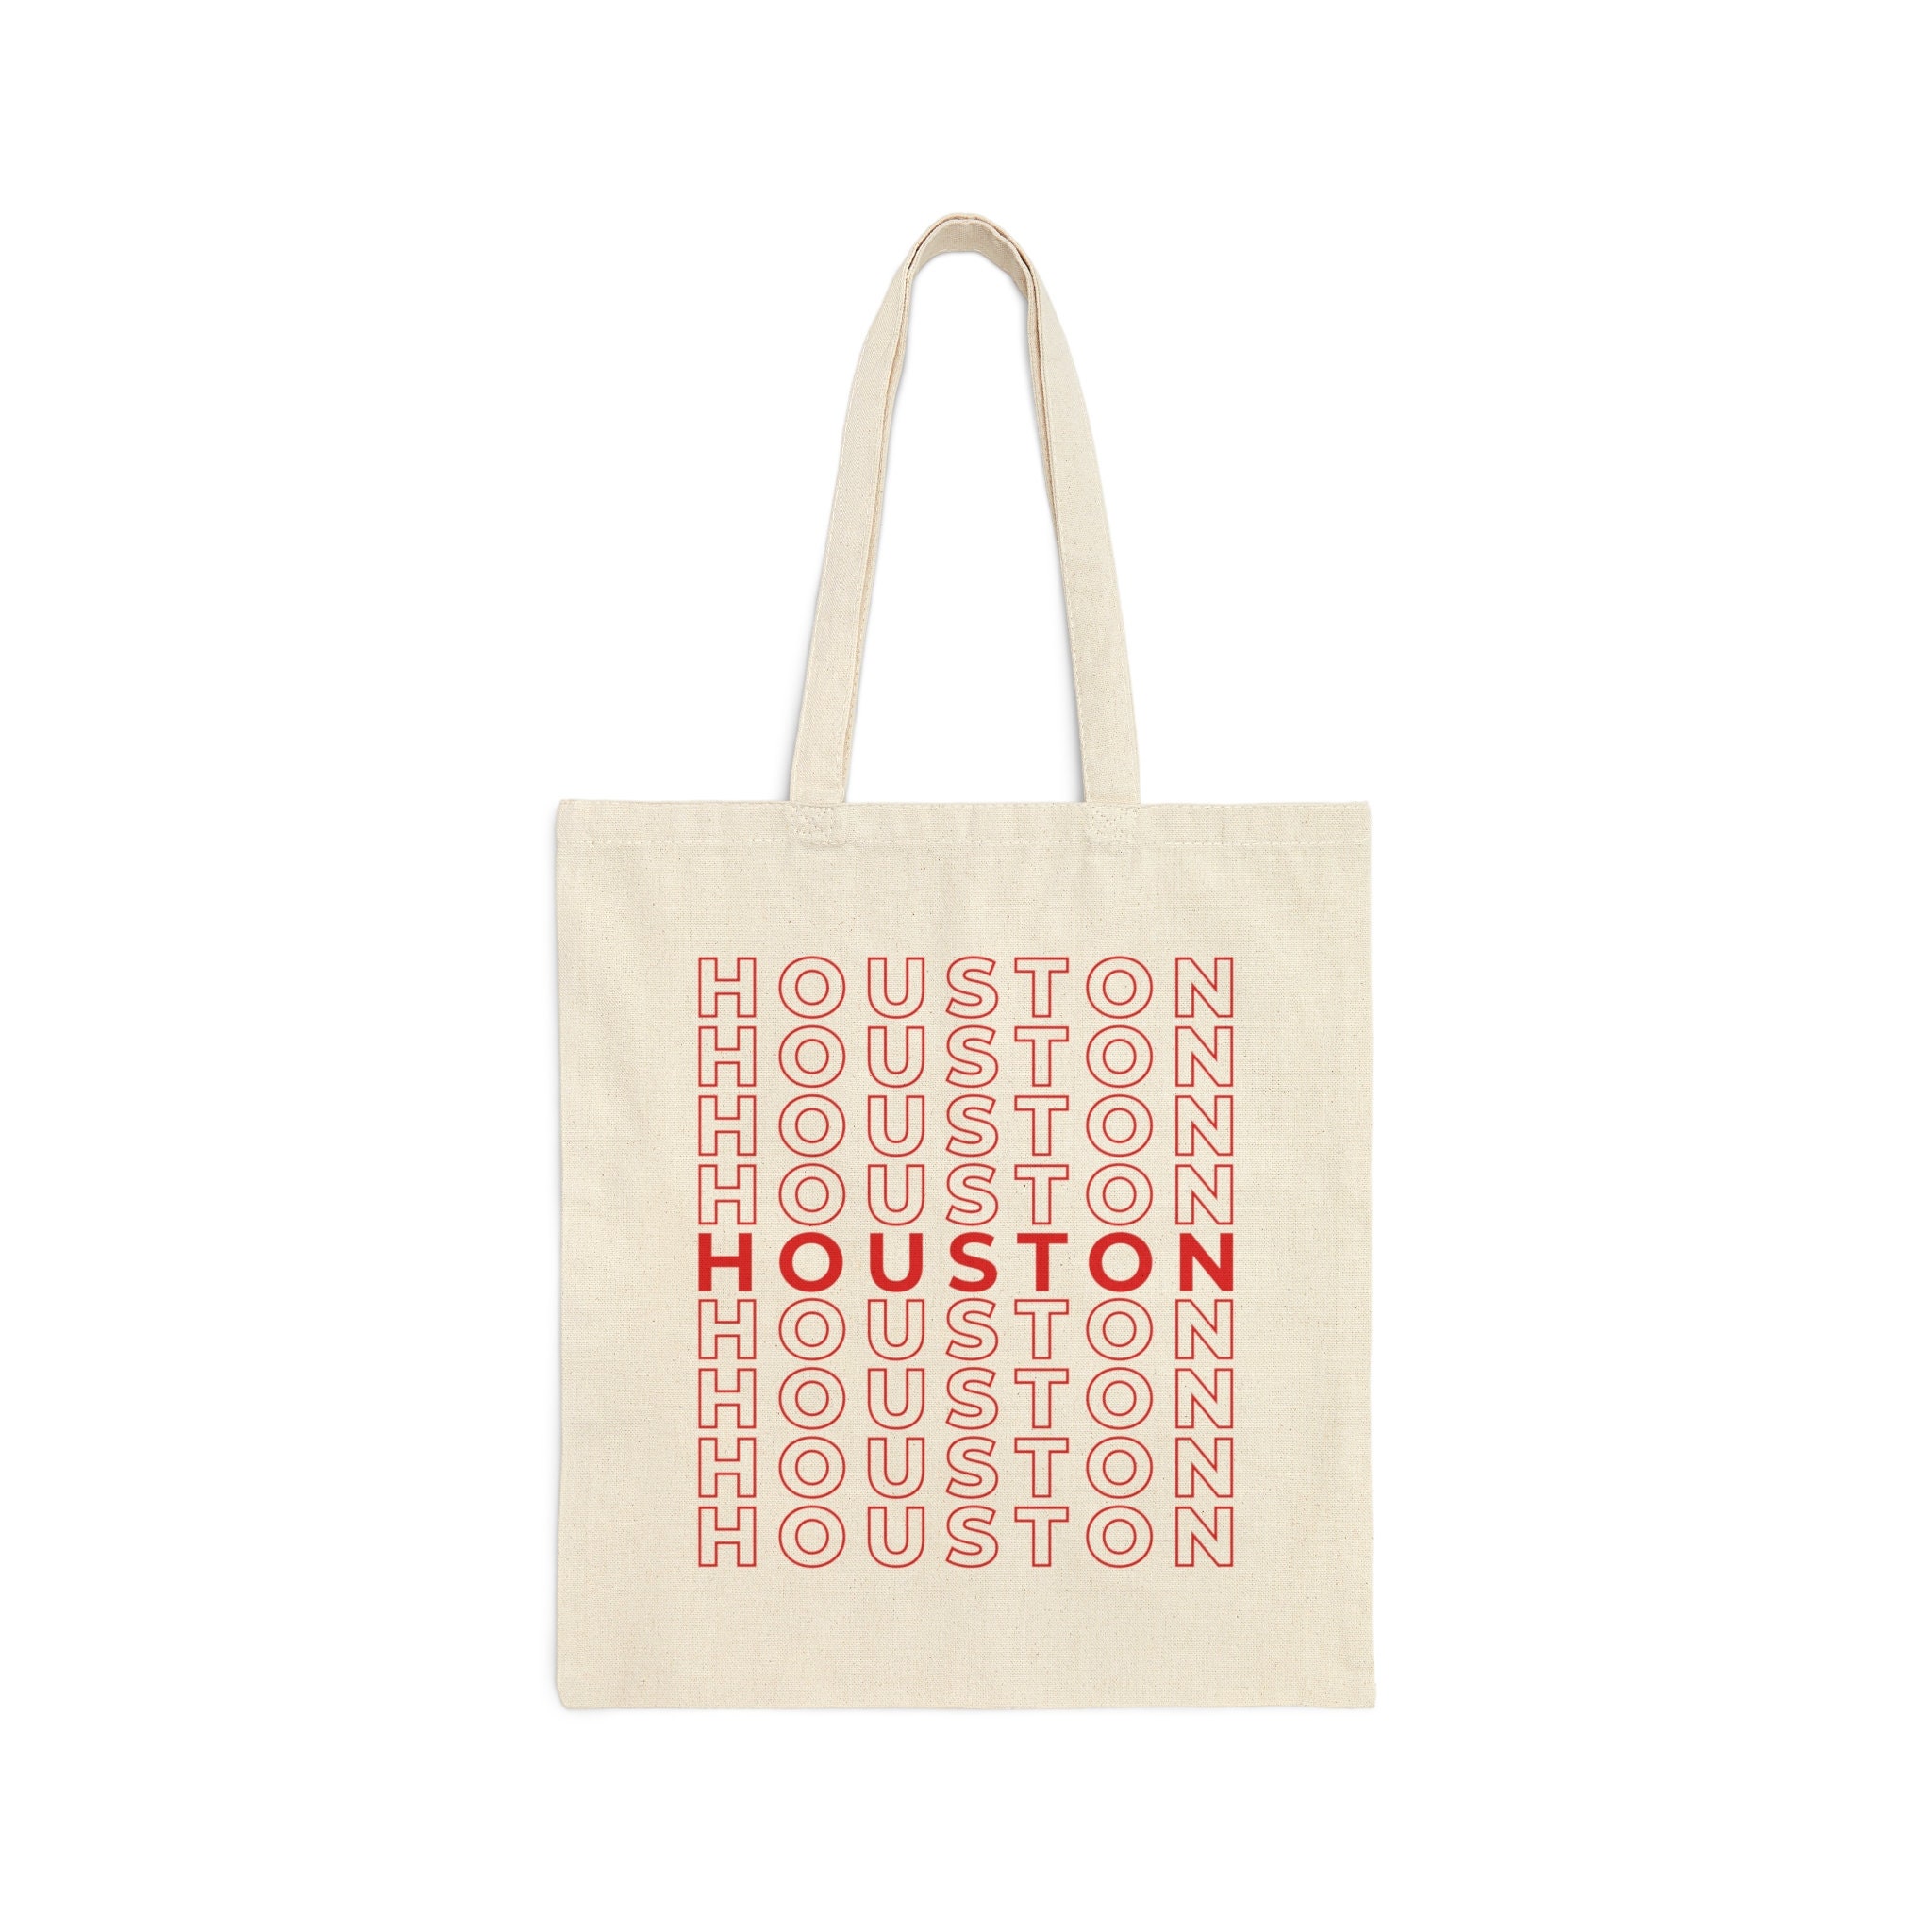 Houston City Scene Building Cityscape Canvas Tote Bag Shopping Bag for  Women,Cute Shoulder Book Tote…See more Houston City Scene Building  Cityscape